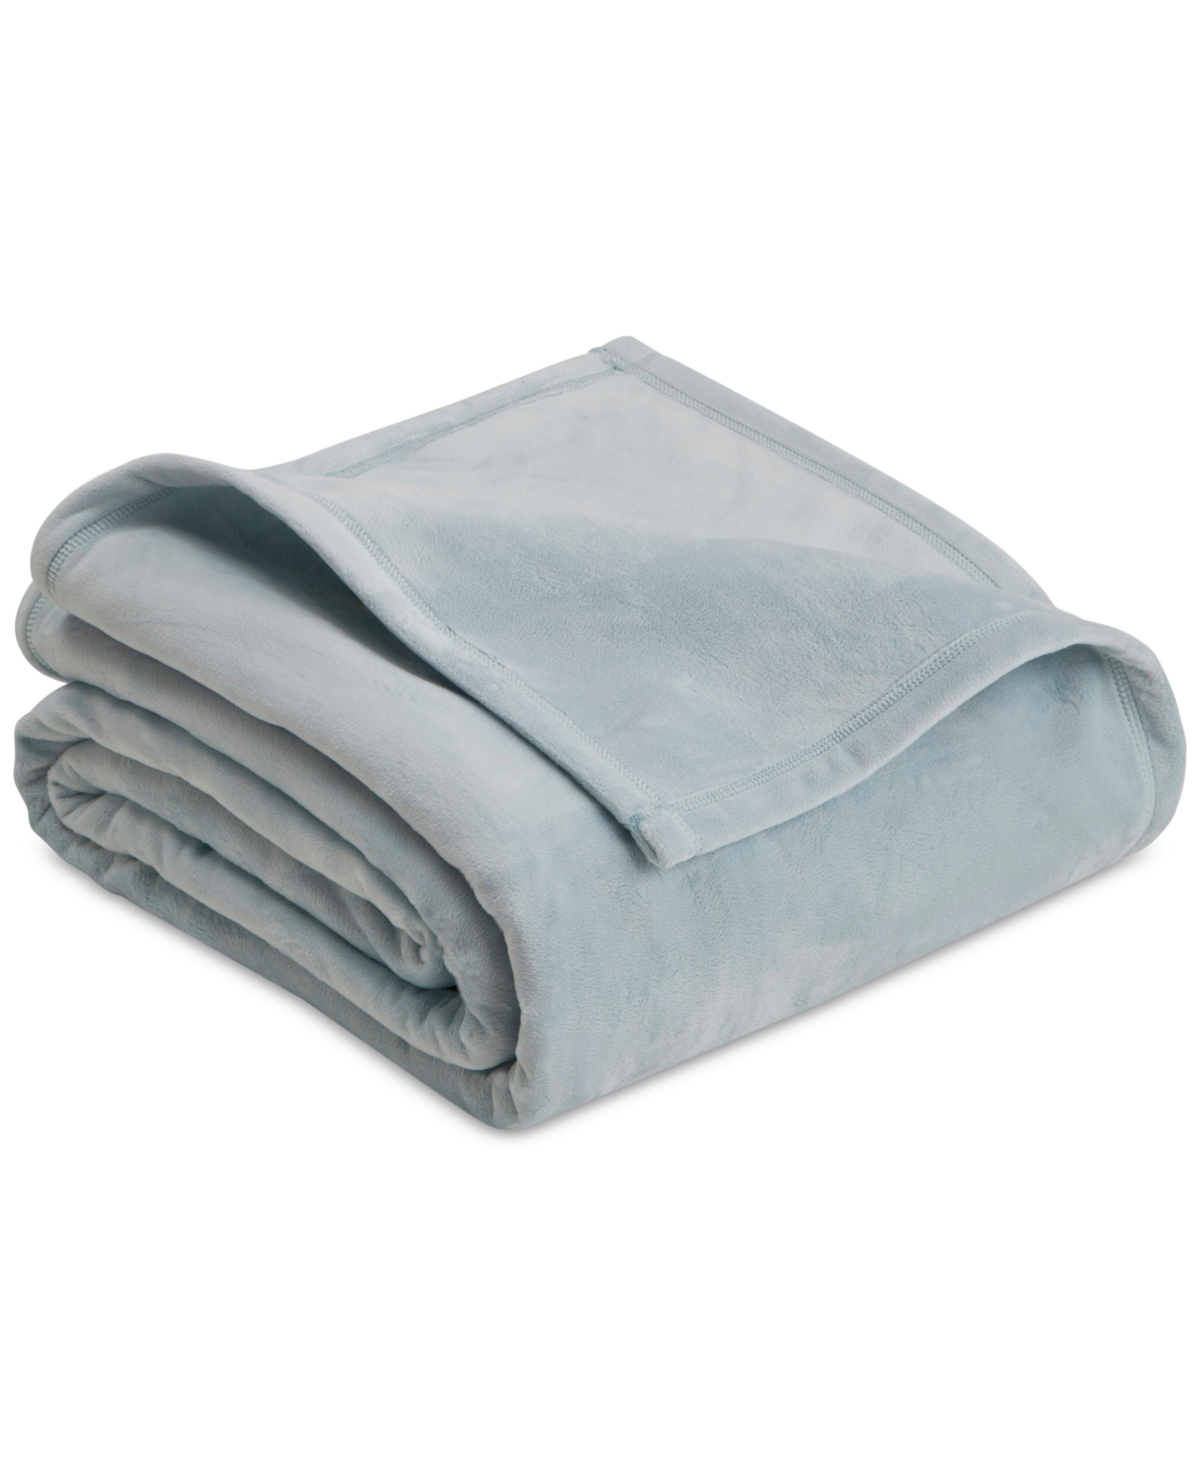 Vellux Plush Knit Full/Queen Blanket Bedding